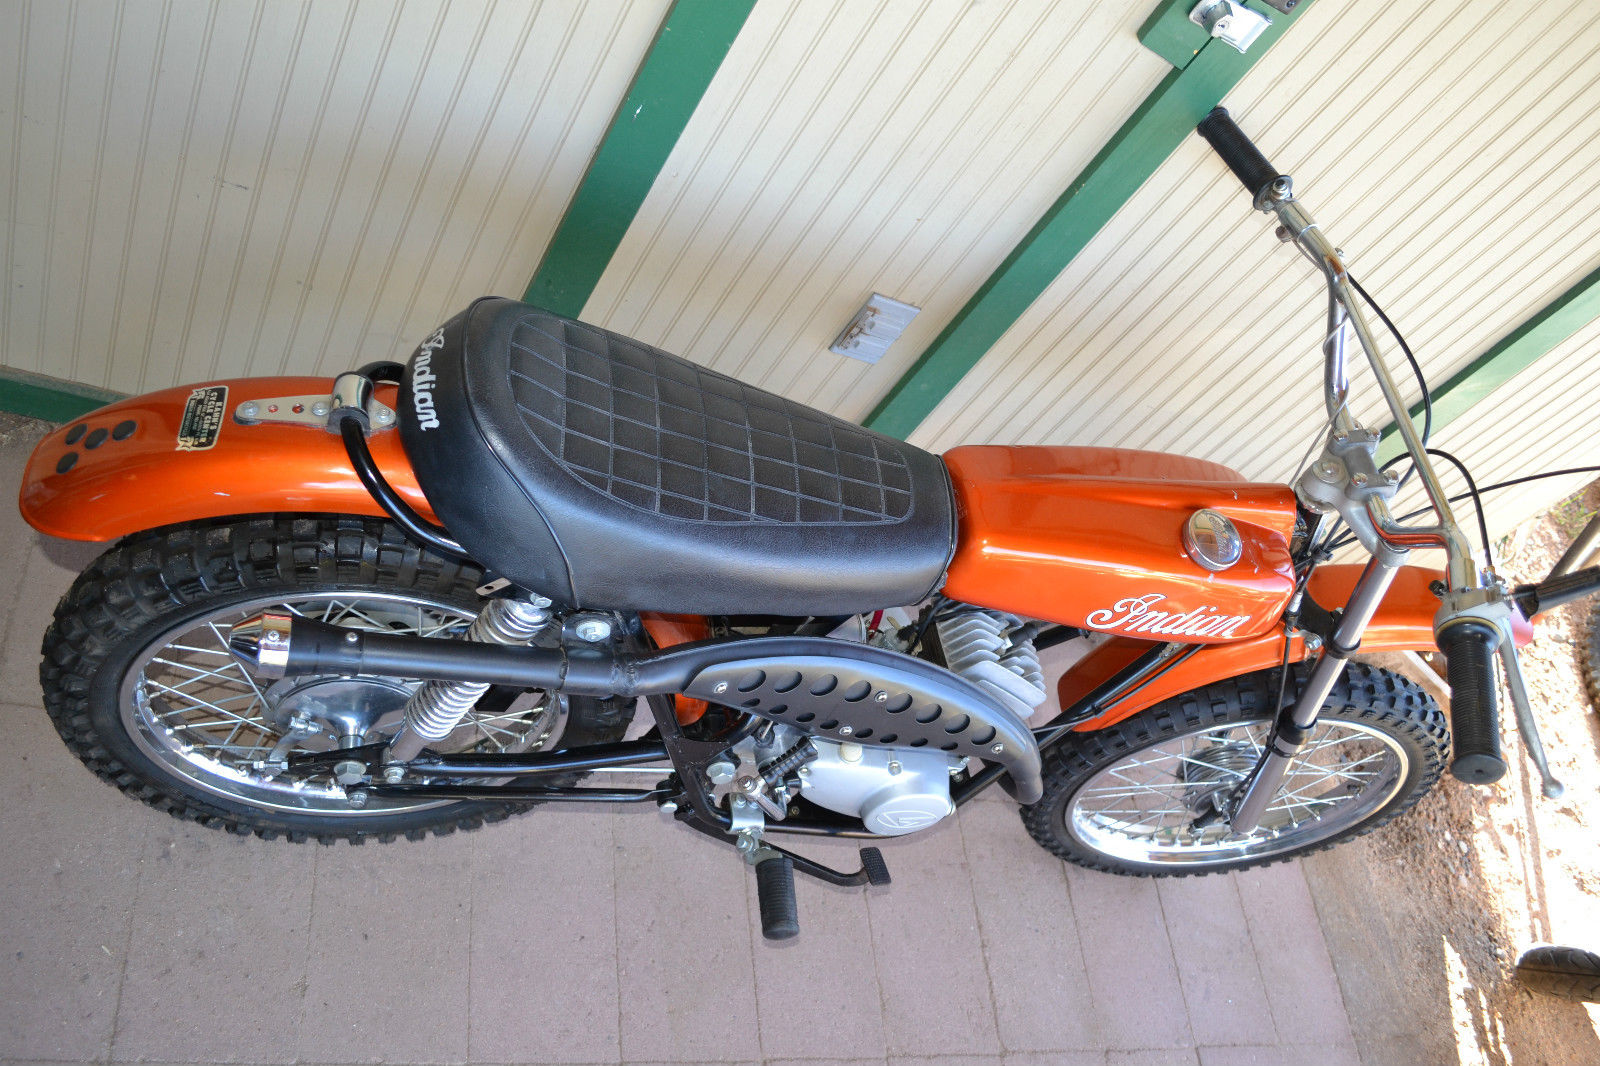 1974 Indian MI 100 dirt bike, Indian 100cc MX